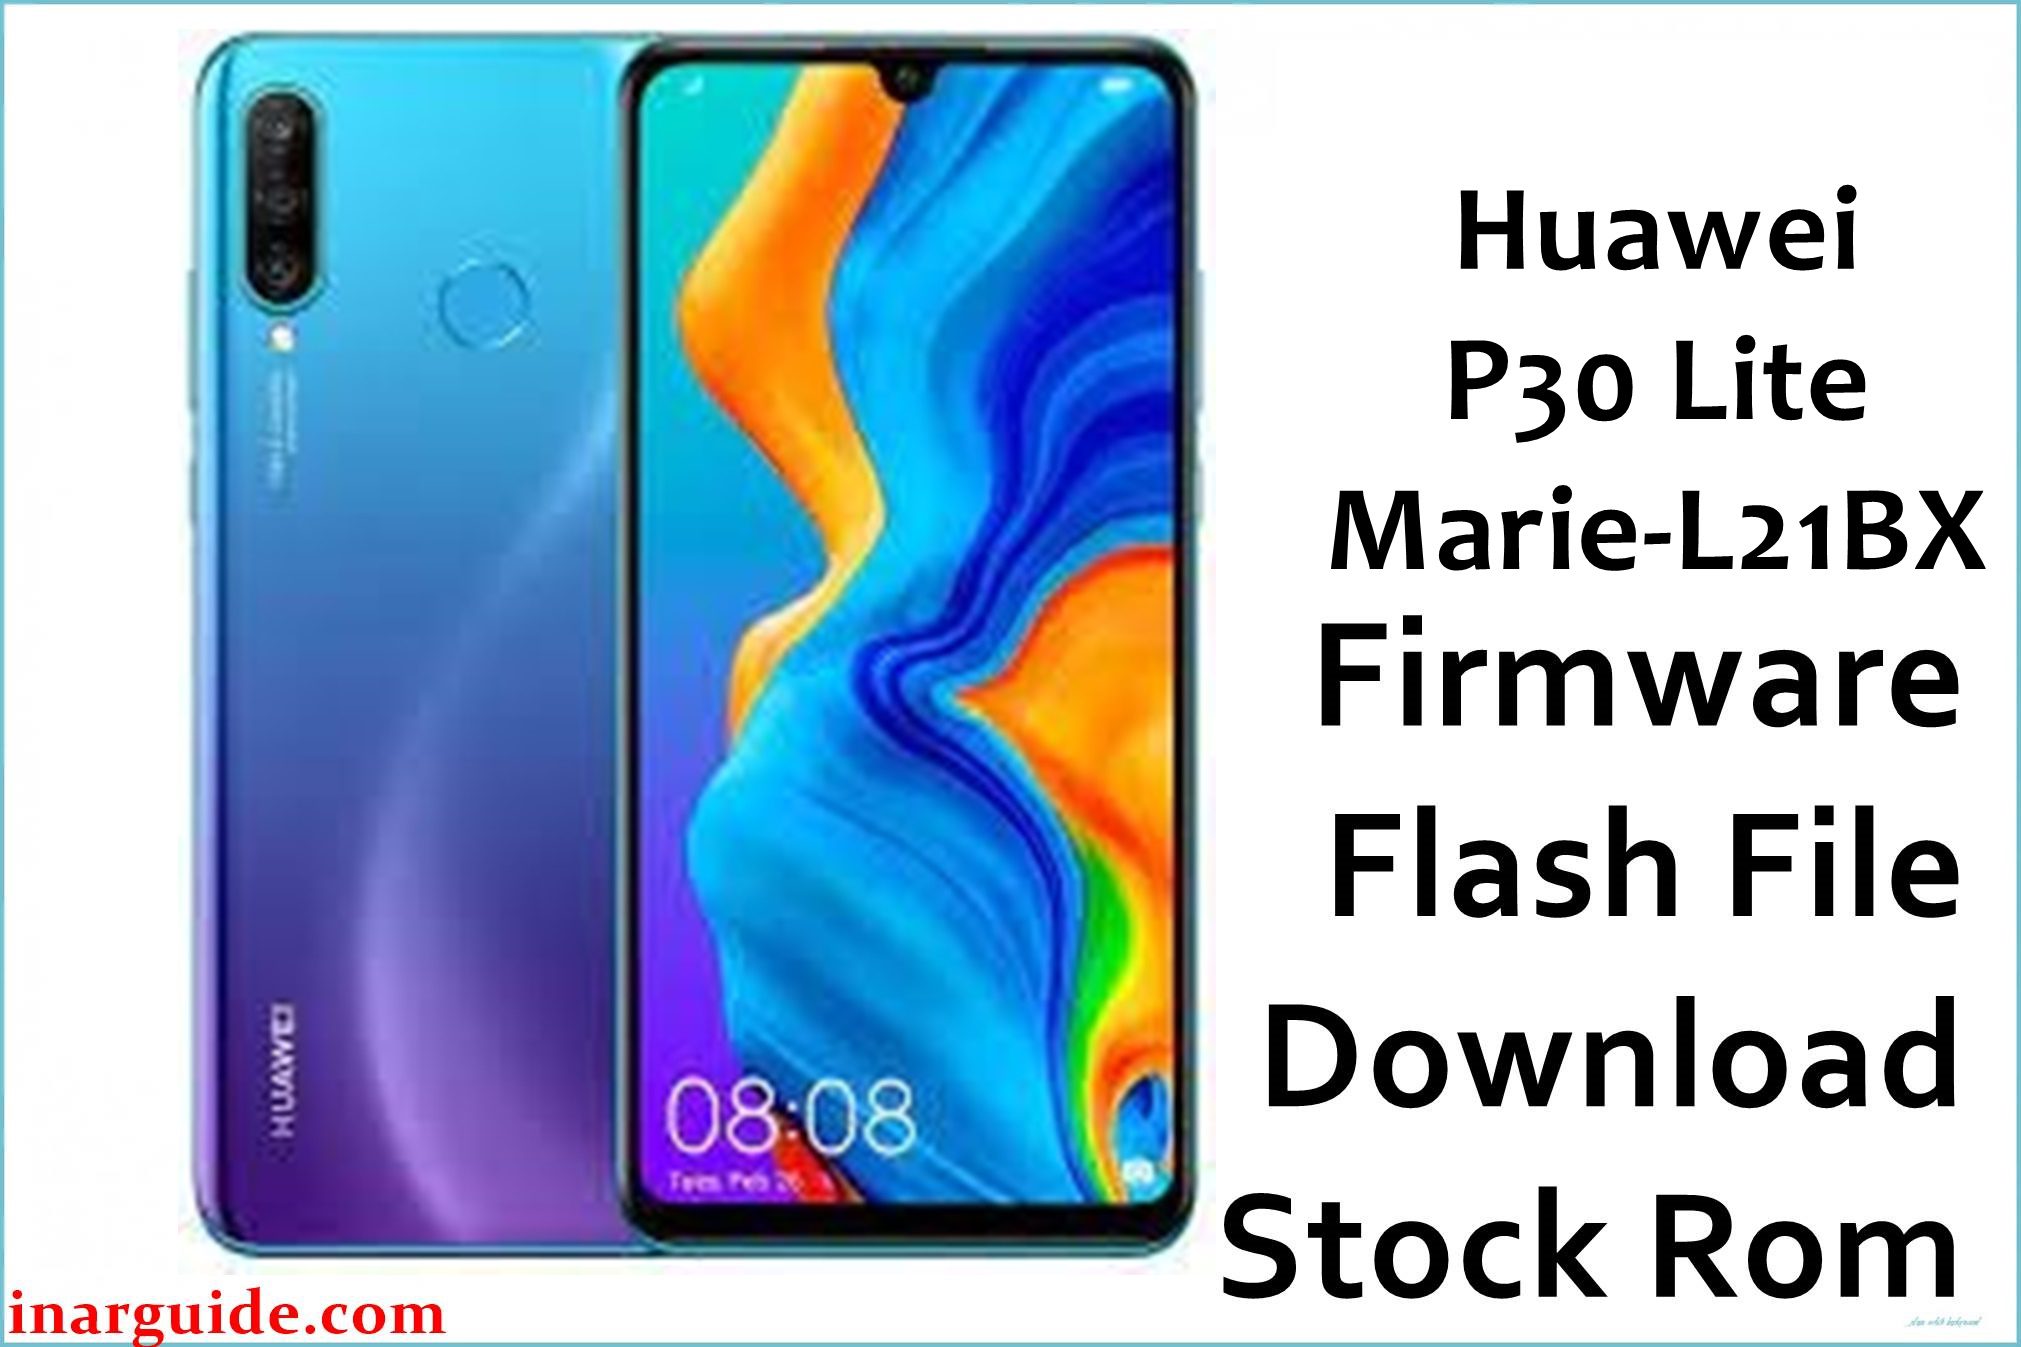 Huawei P30 Lite Marie L21BX